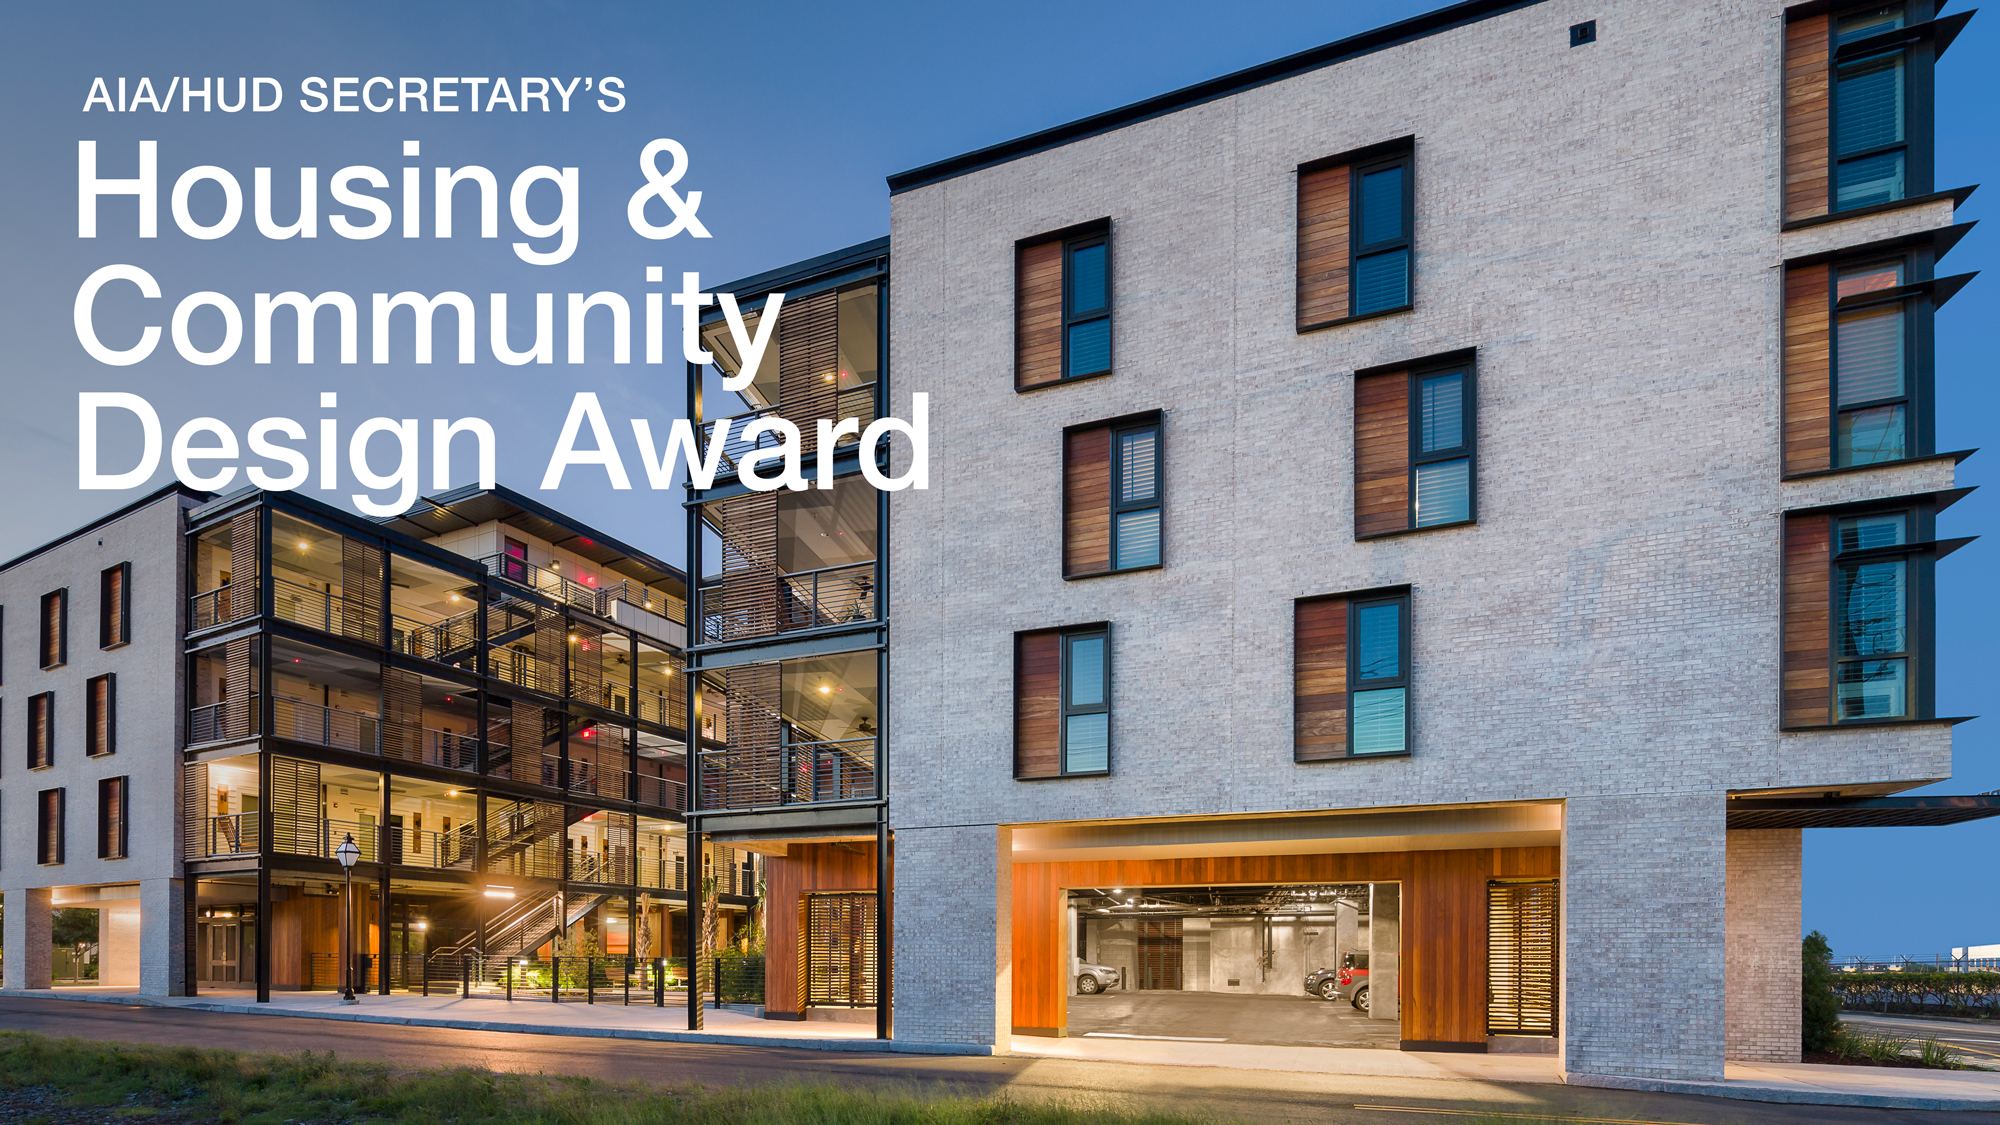 Housing & Community Design Award Building